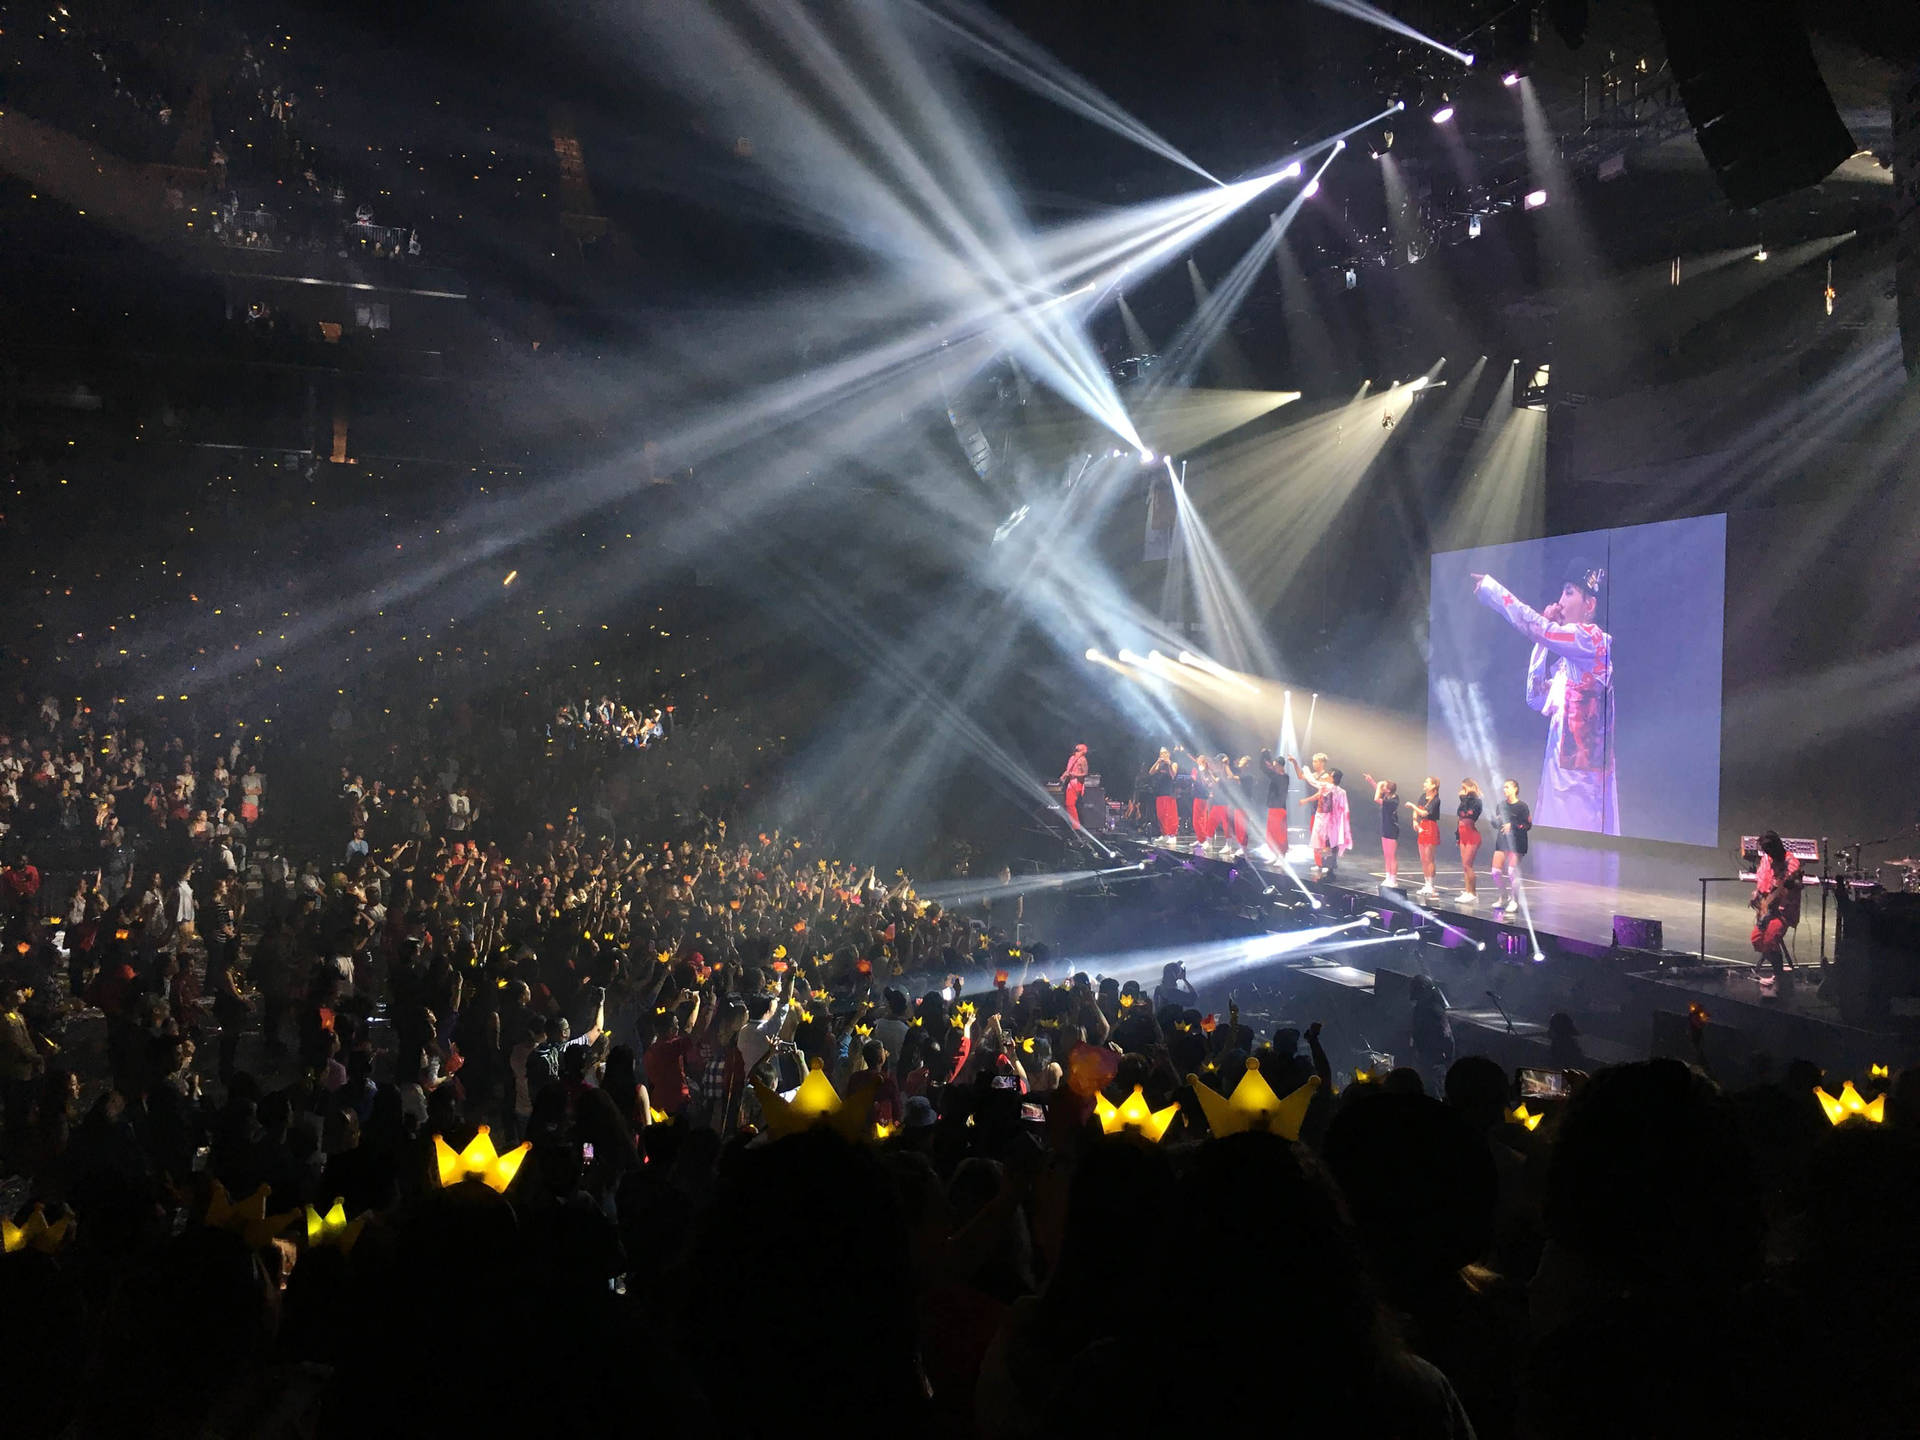 G-dragon Glamorous In Concert - A Festival Of K-pop Music